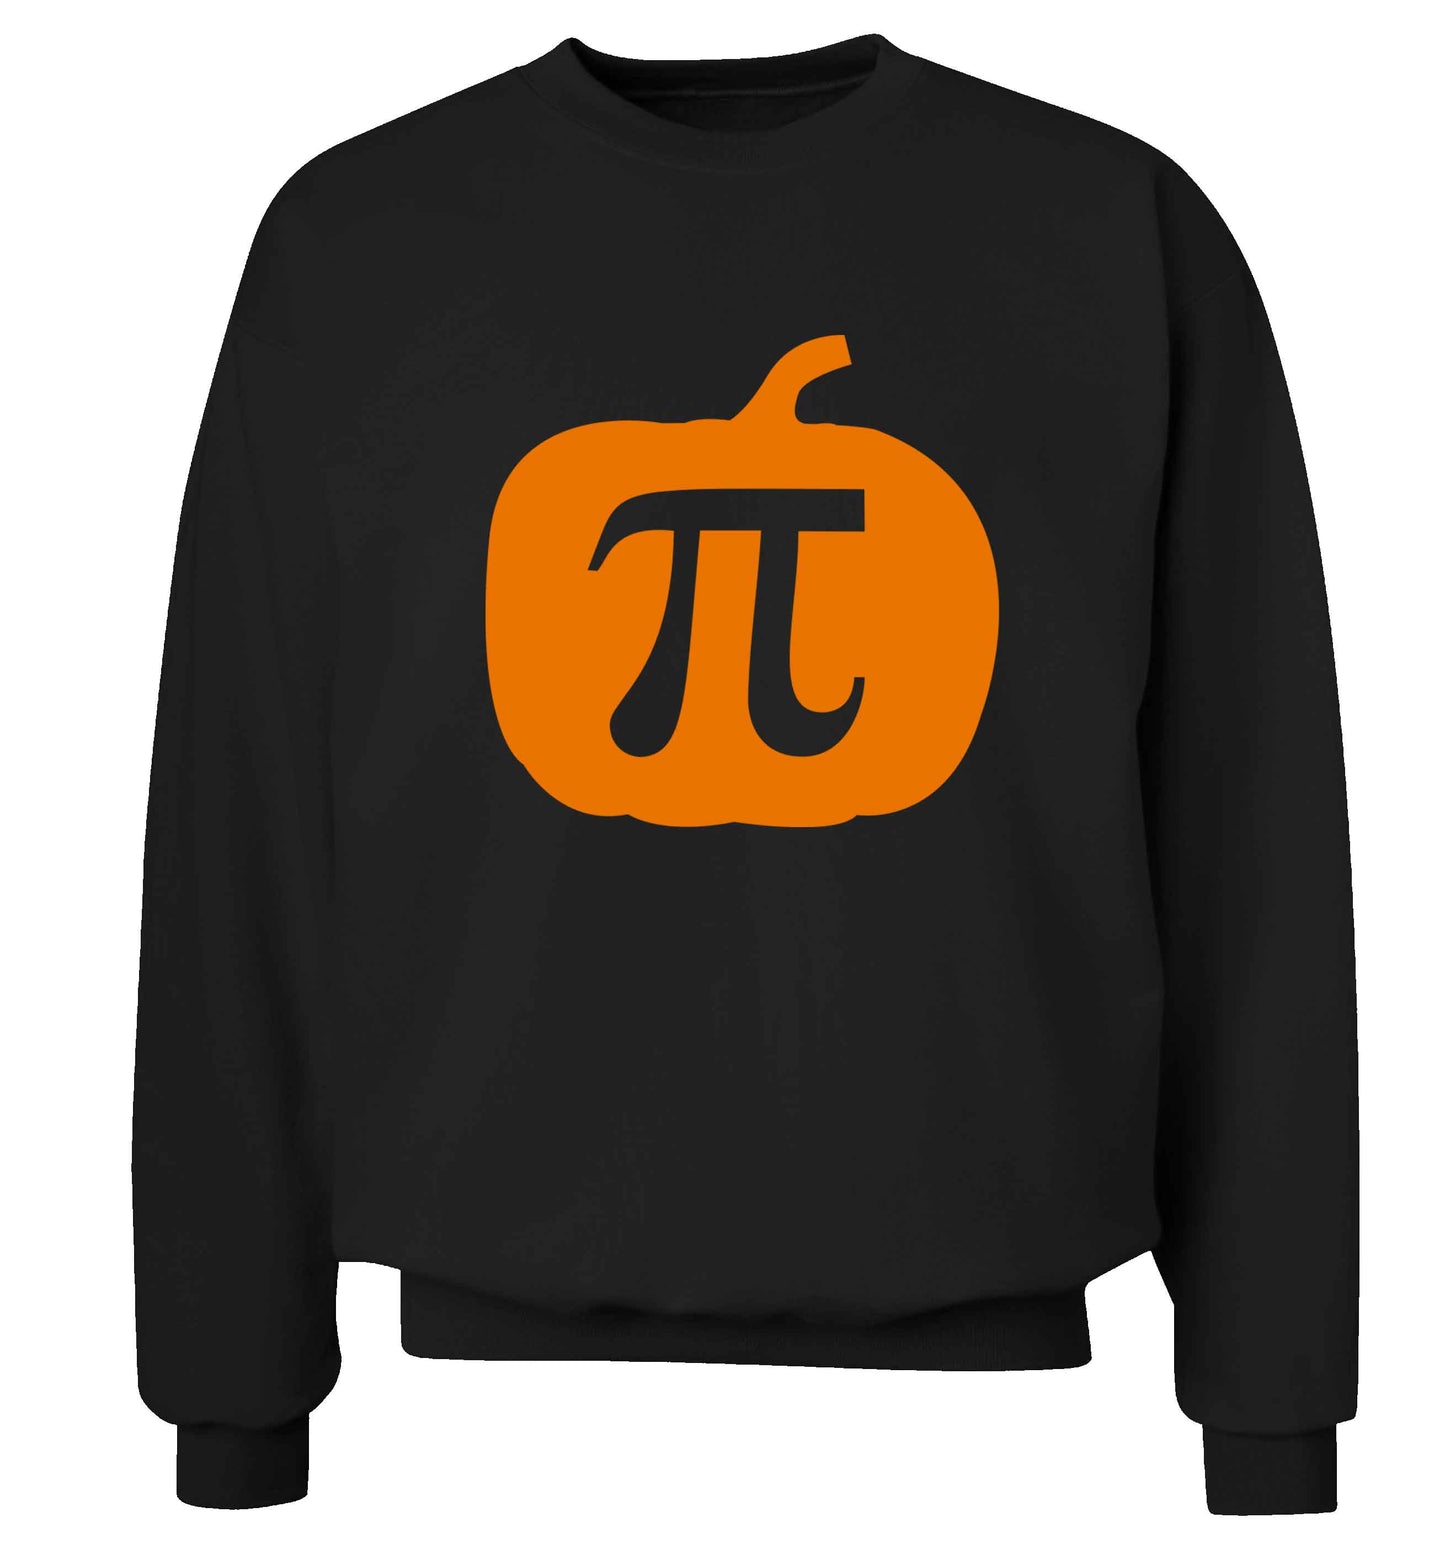 Pumpkin Pie adult's unisex black sweater 2XL